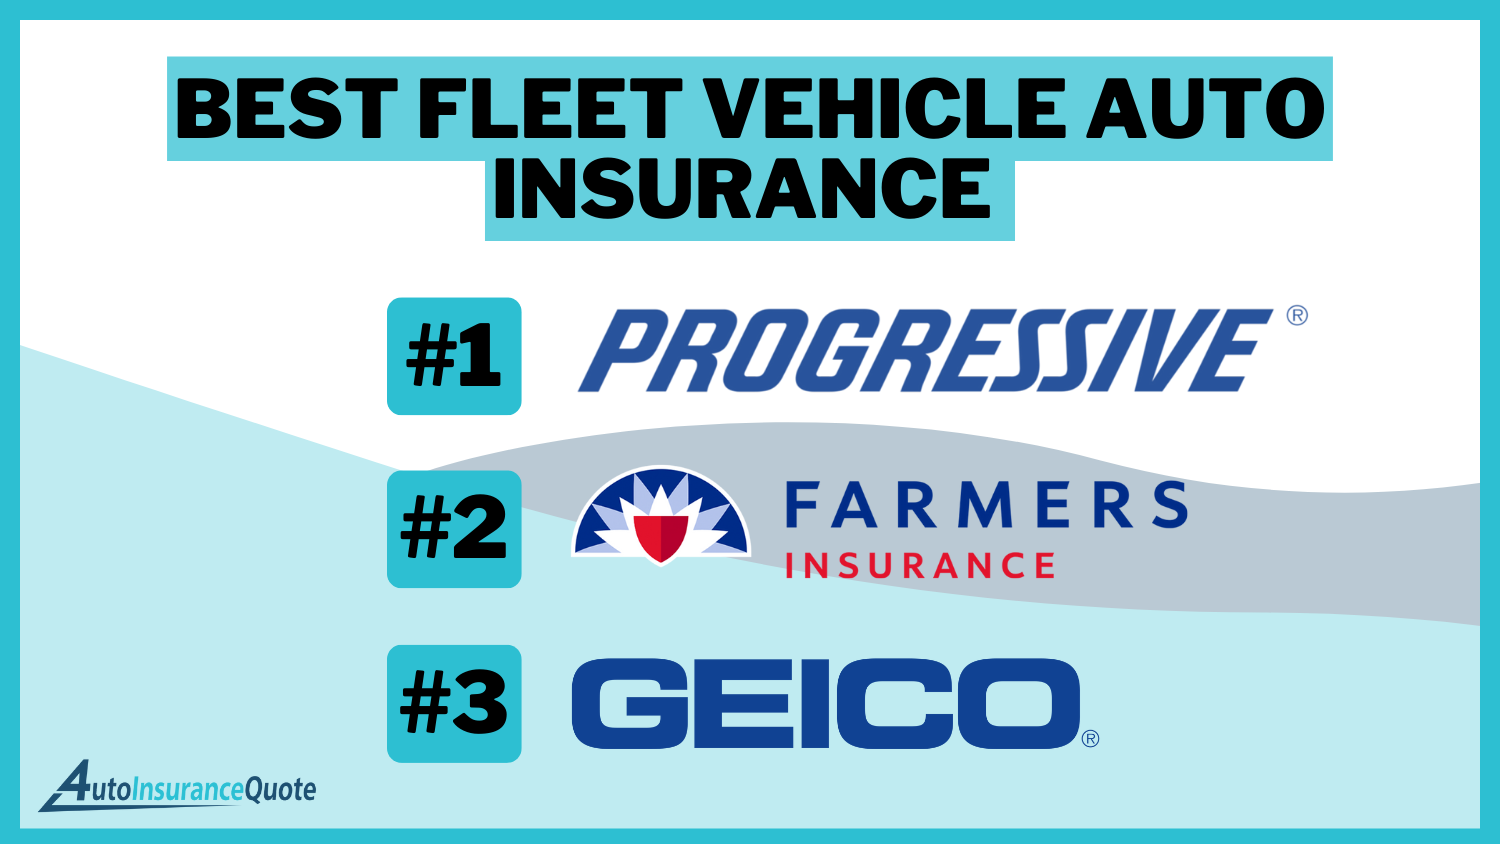 Best Fleet Vehicle Auto Insurance: Progressive, Farmers, Geico